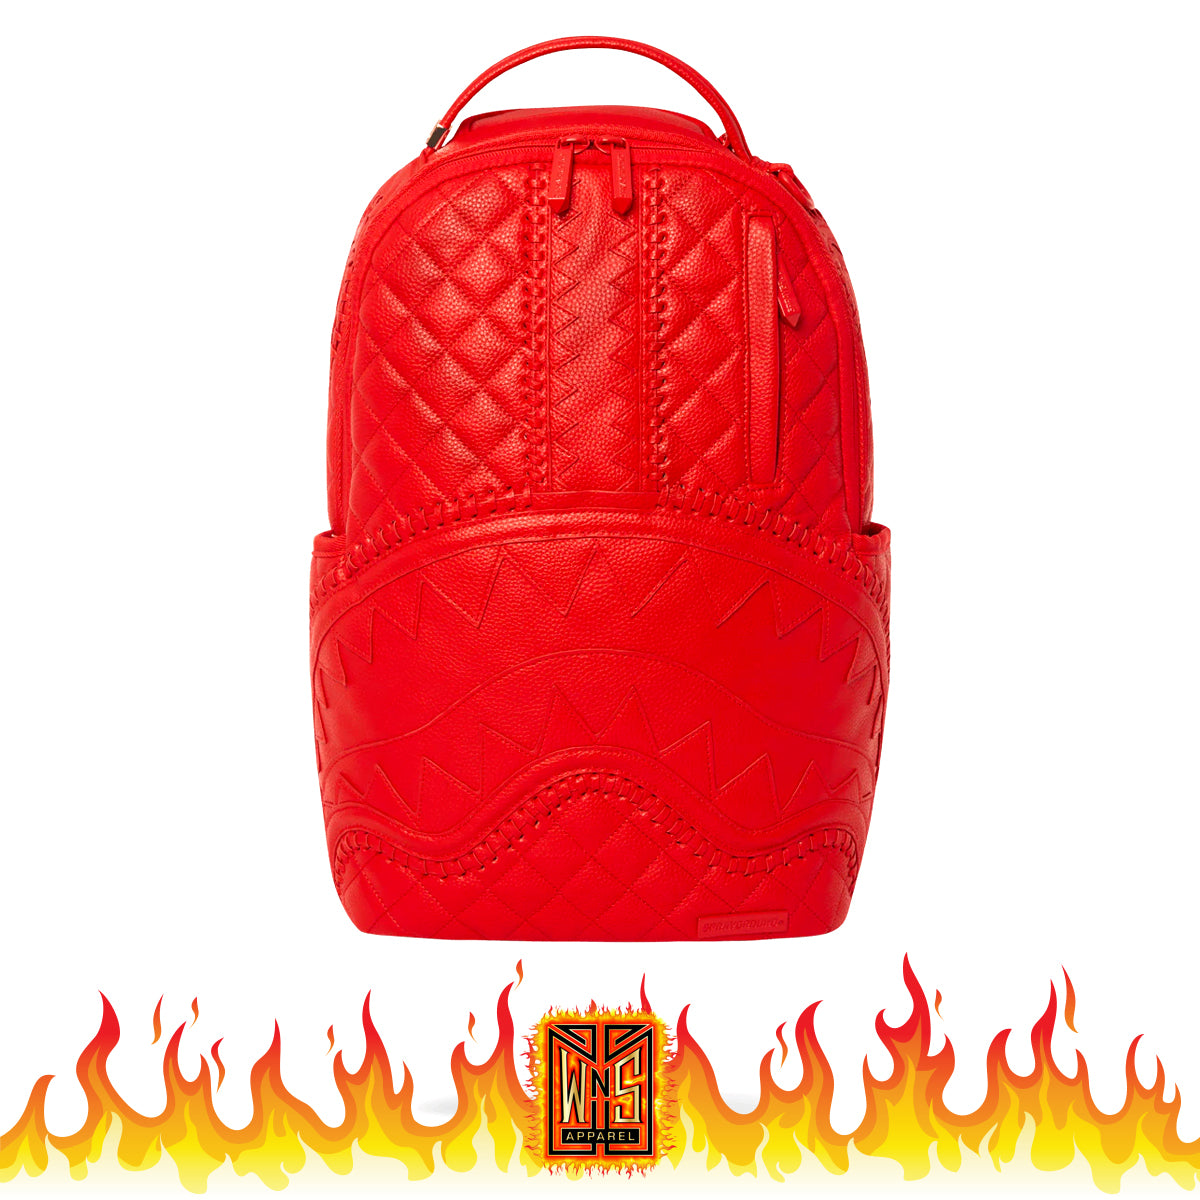 Backpack Sprayground SPLIT RIVIERA DLXSVF BACKPACK Red